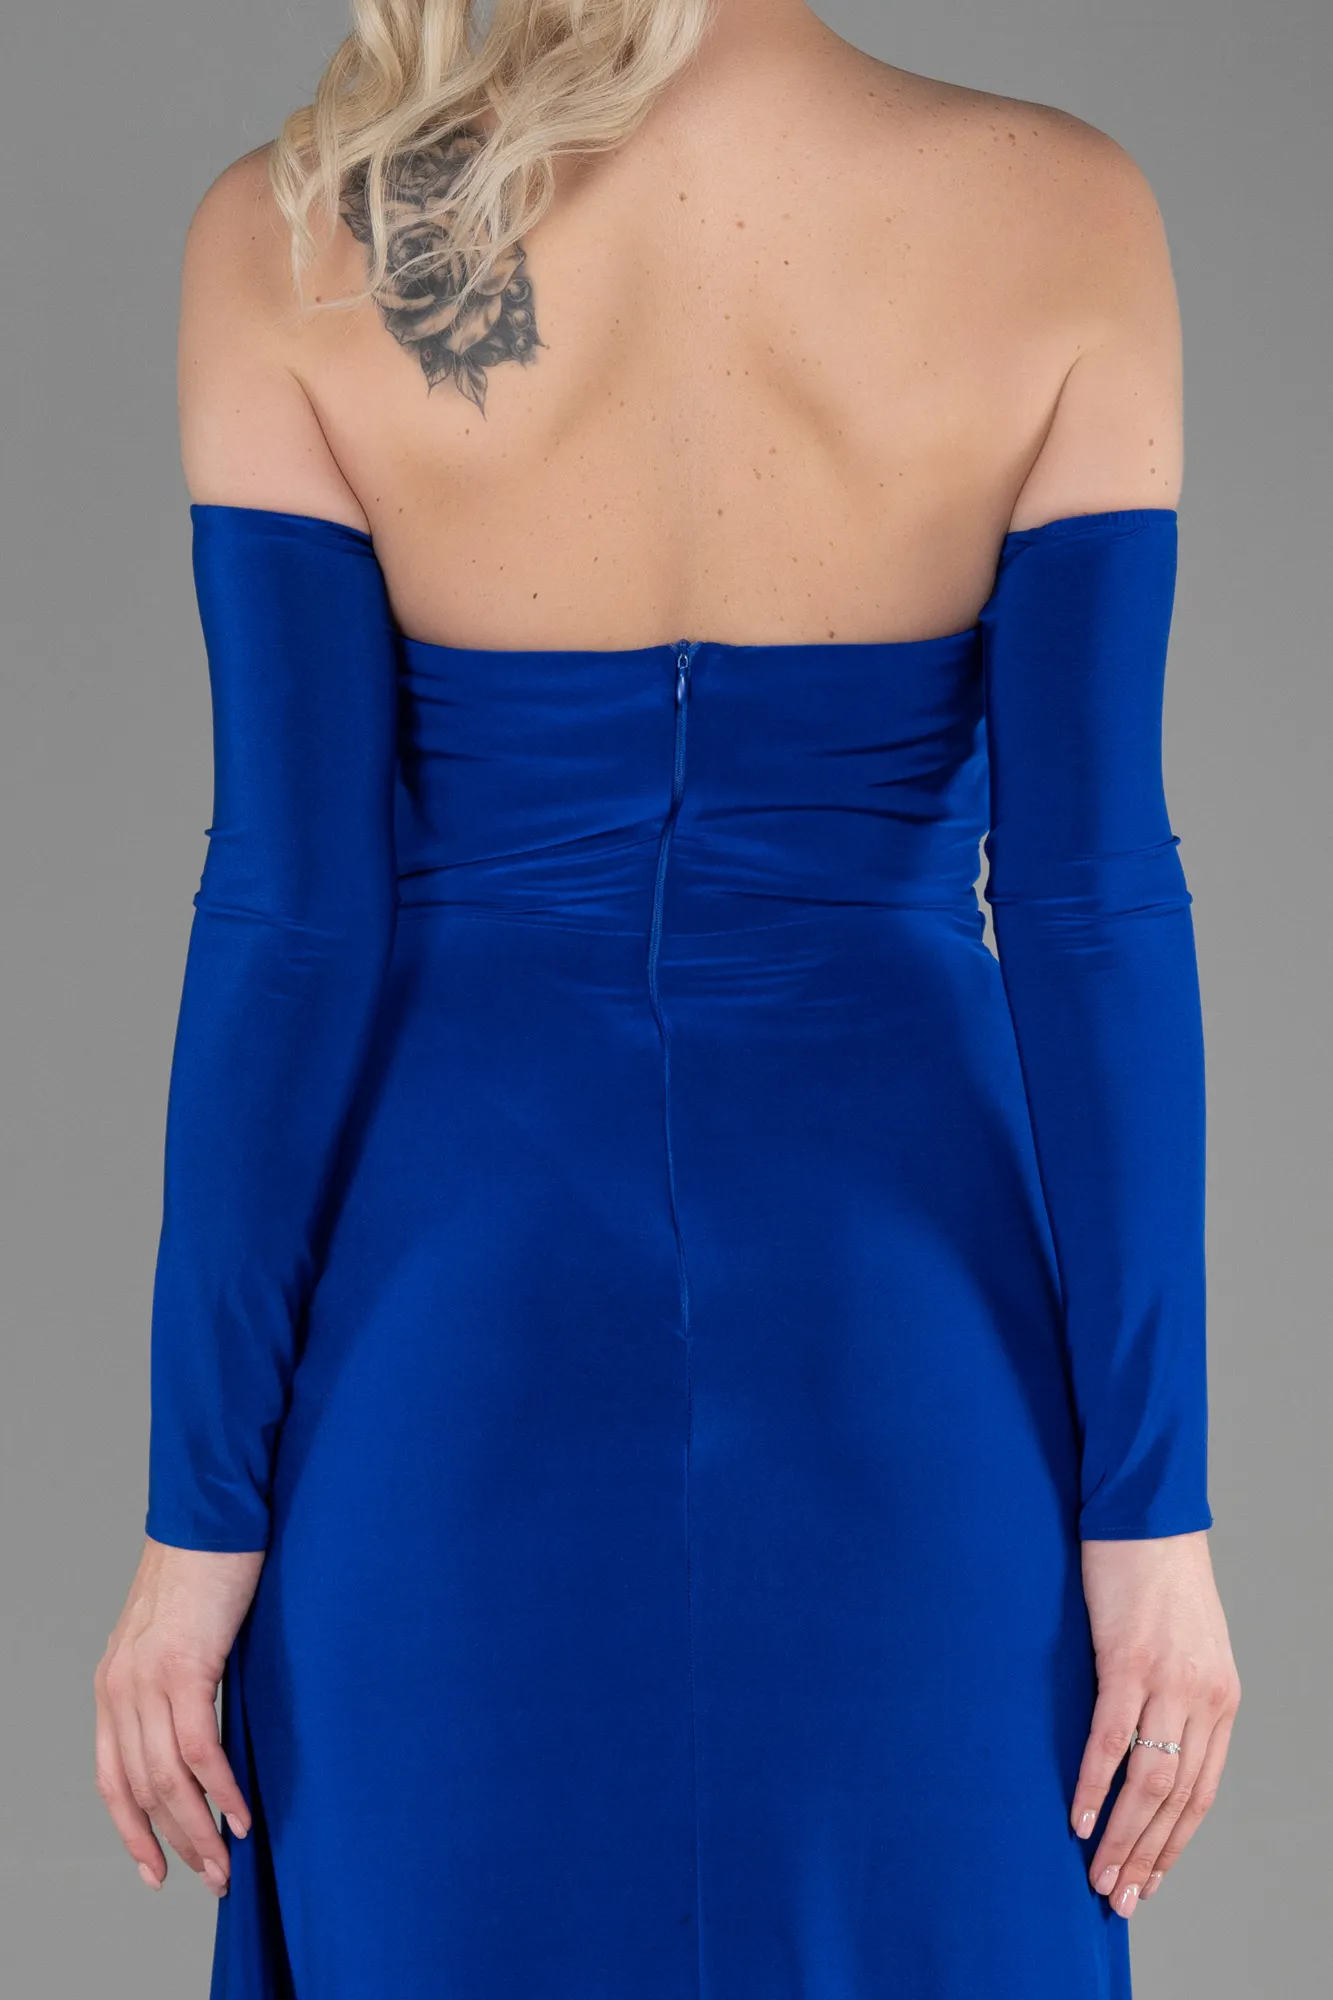 Sax Blue-Long Evening Dress ABU3351